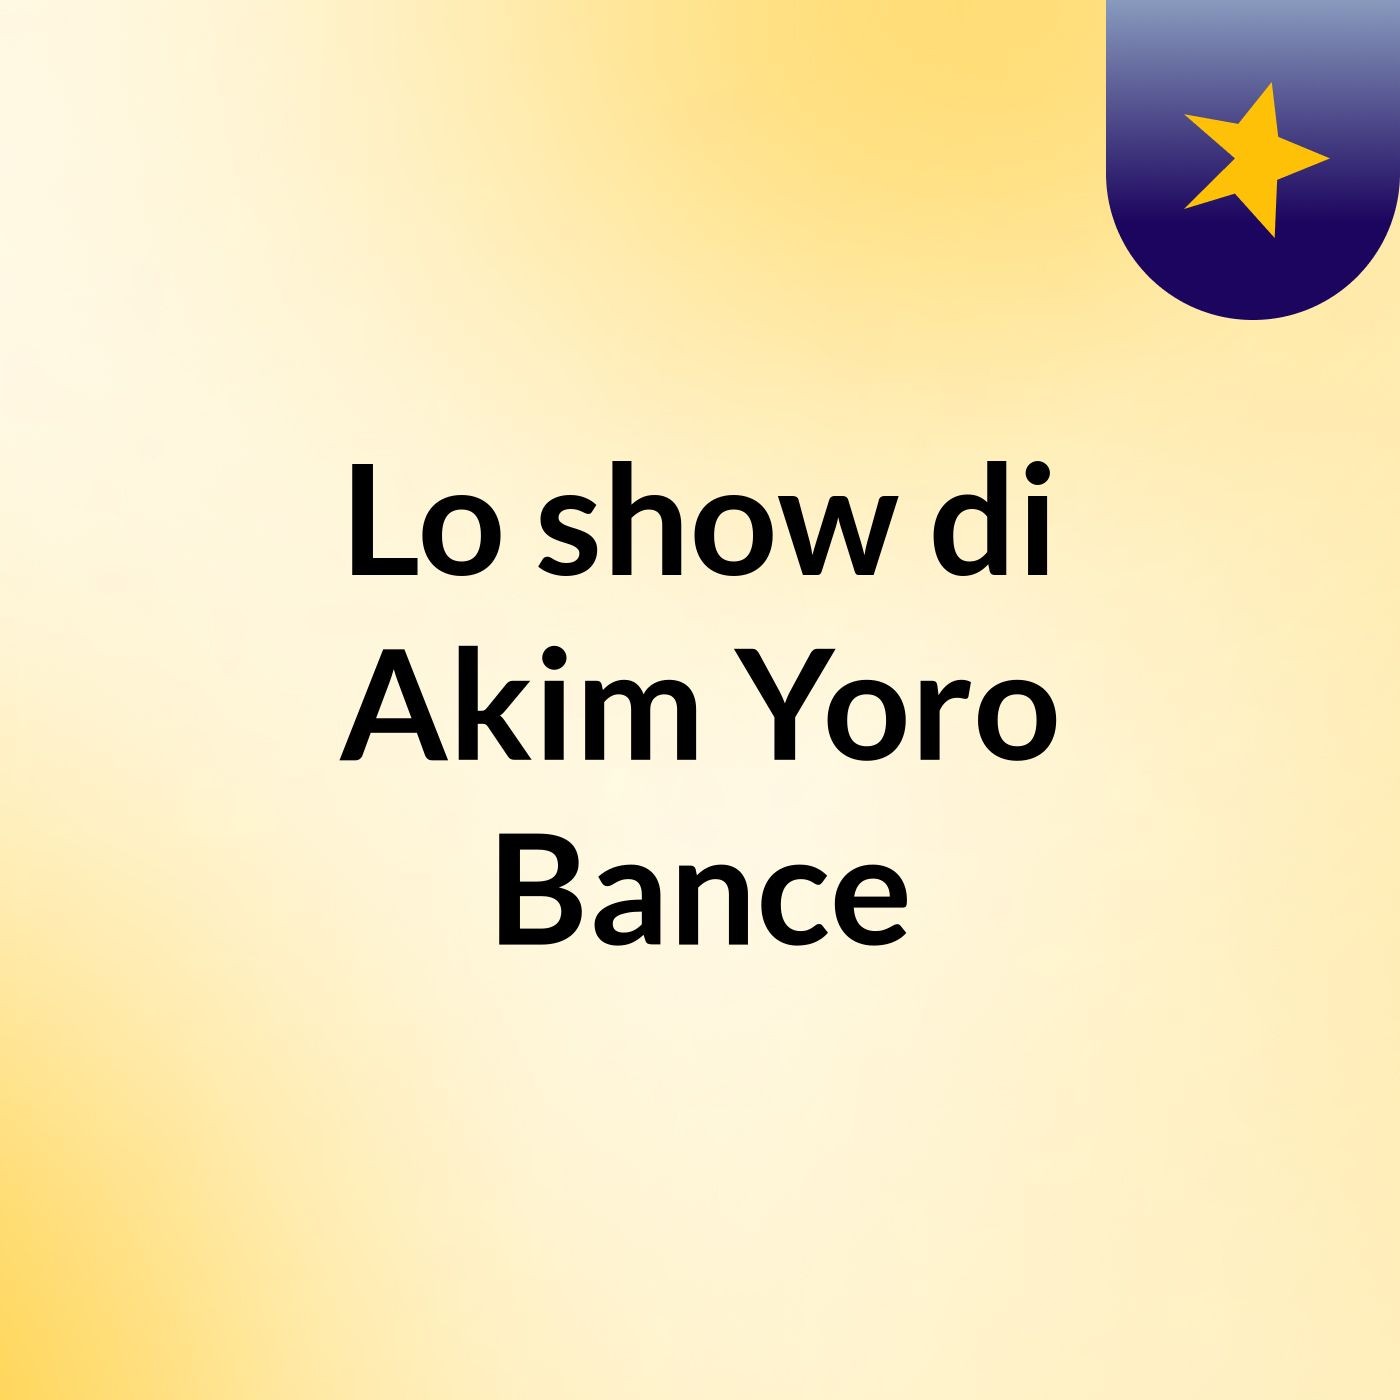 Lo show di Akim Yoro Bance